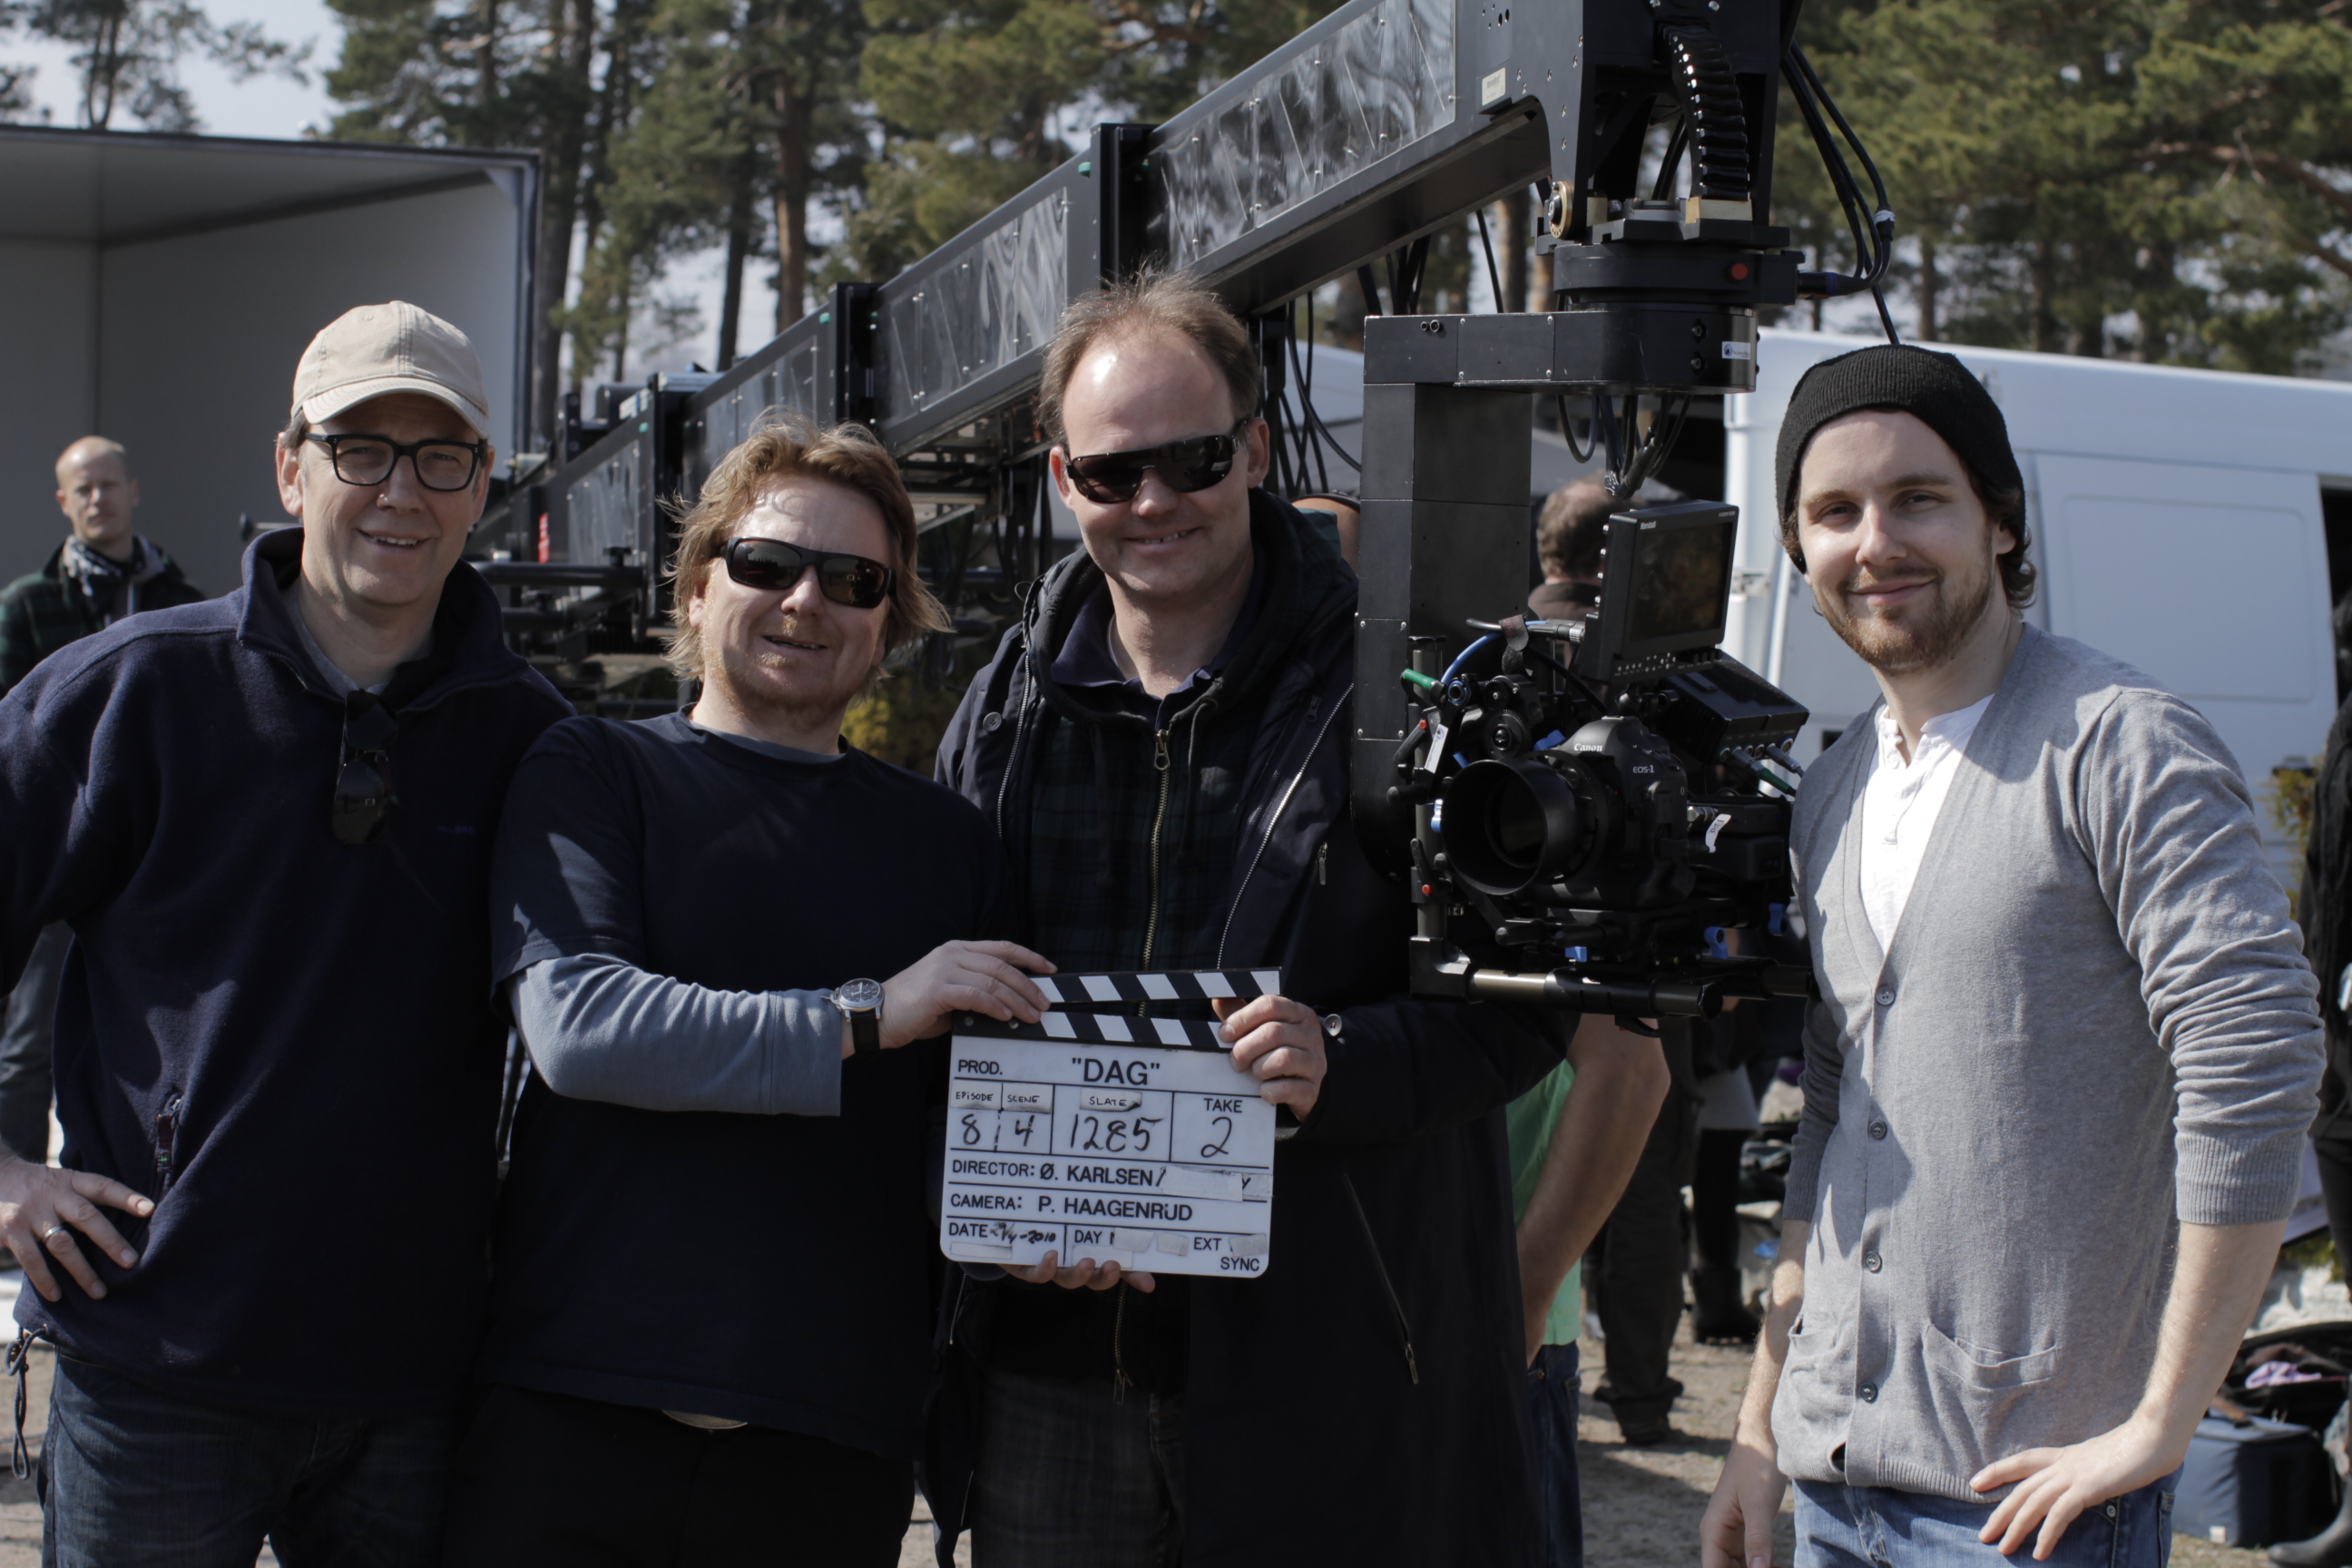 DAG Season 1. With Key Grip Morten Magnussen, 1st AC Anders Legaard and Camera Operator Håvar Karlsen. Working with Moviebird 30